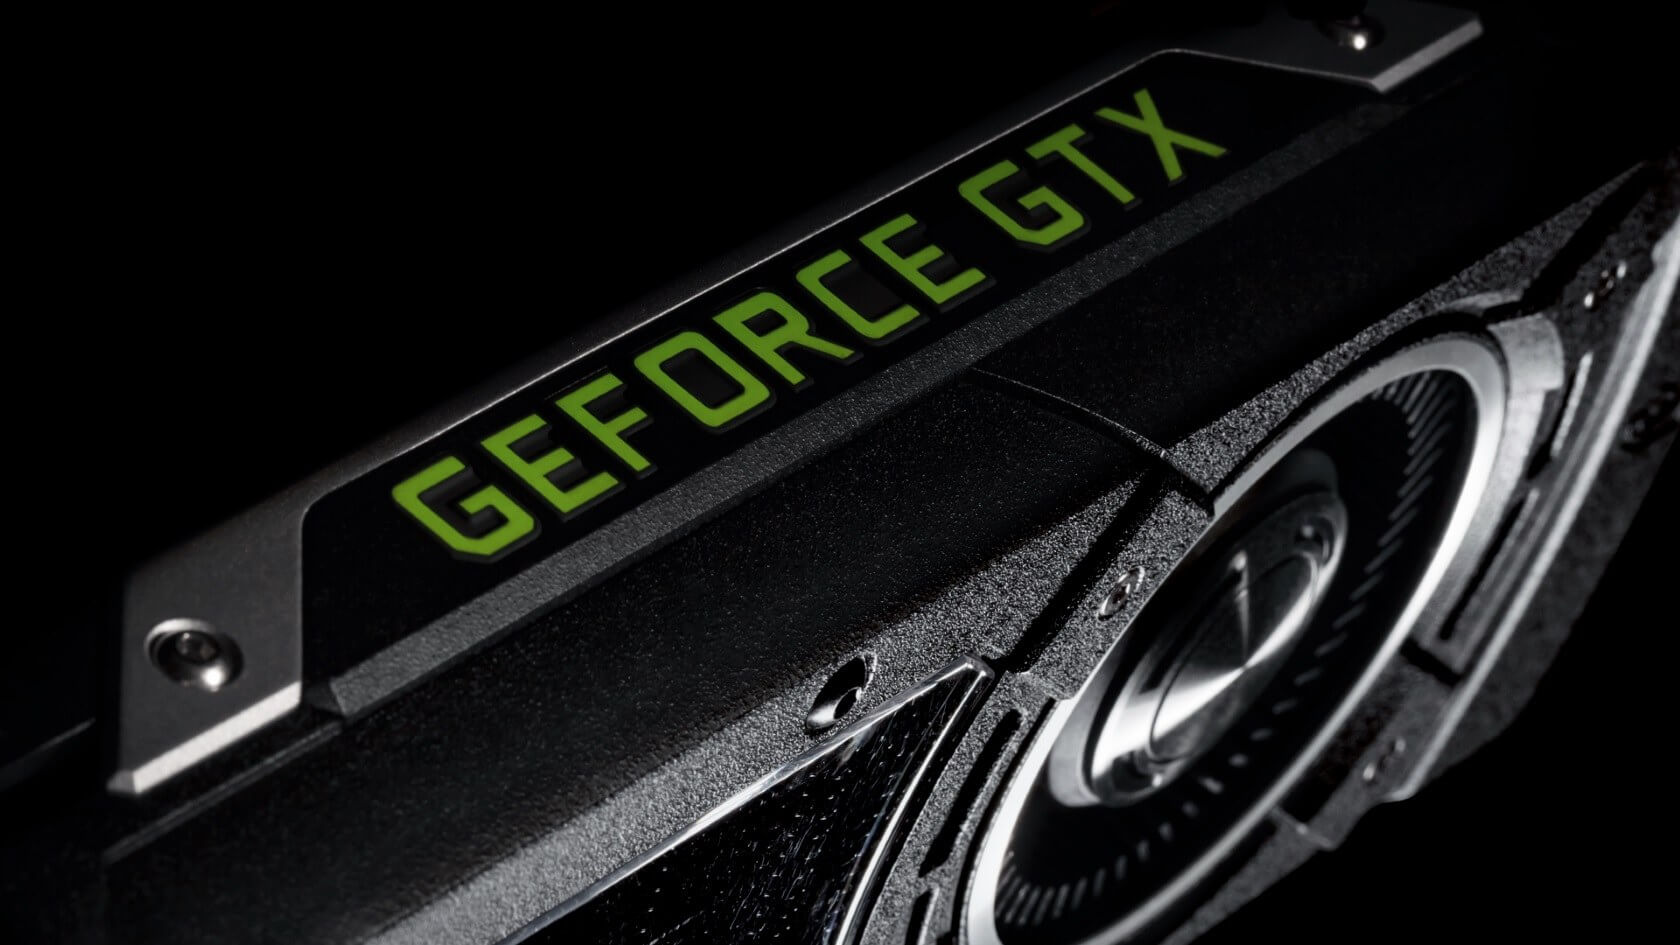 Uygun fiyatlı GeForce GTX 1660 Tİ